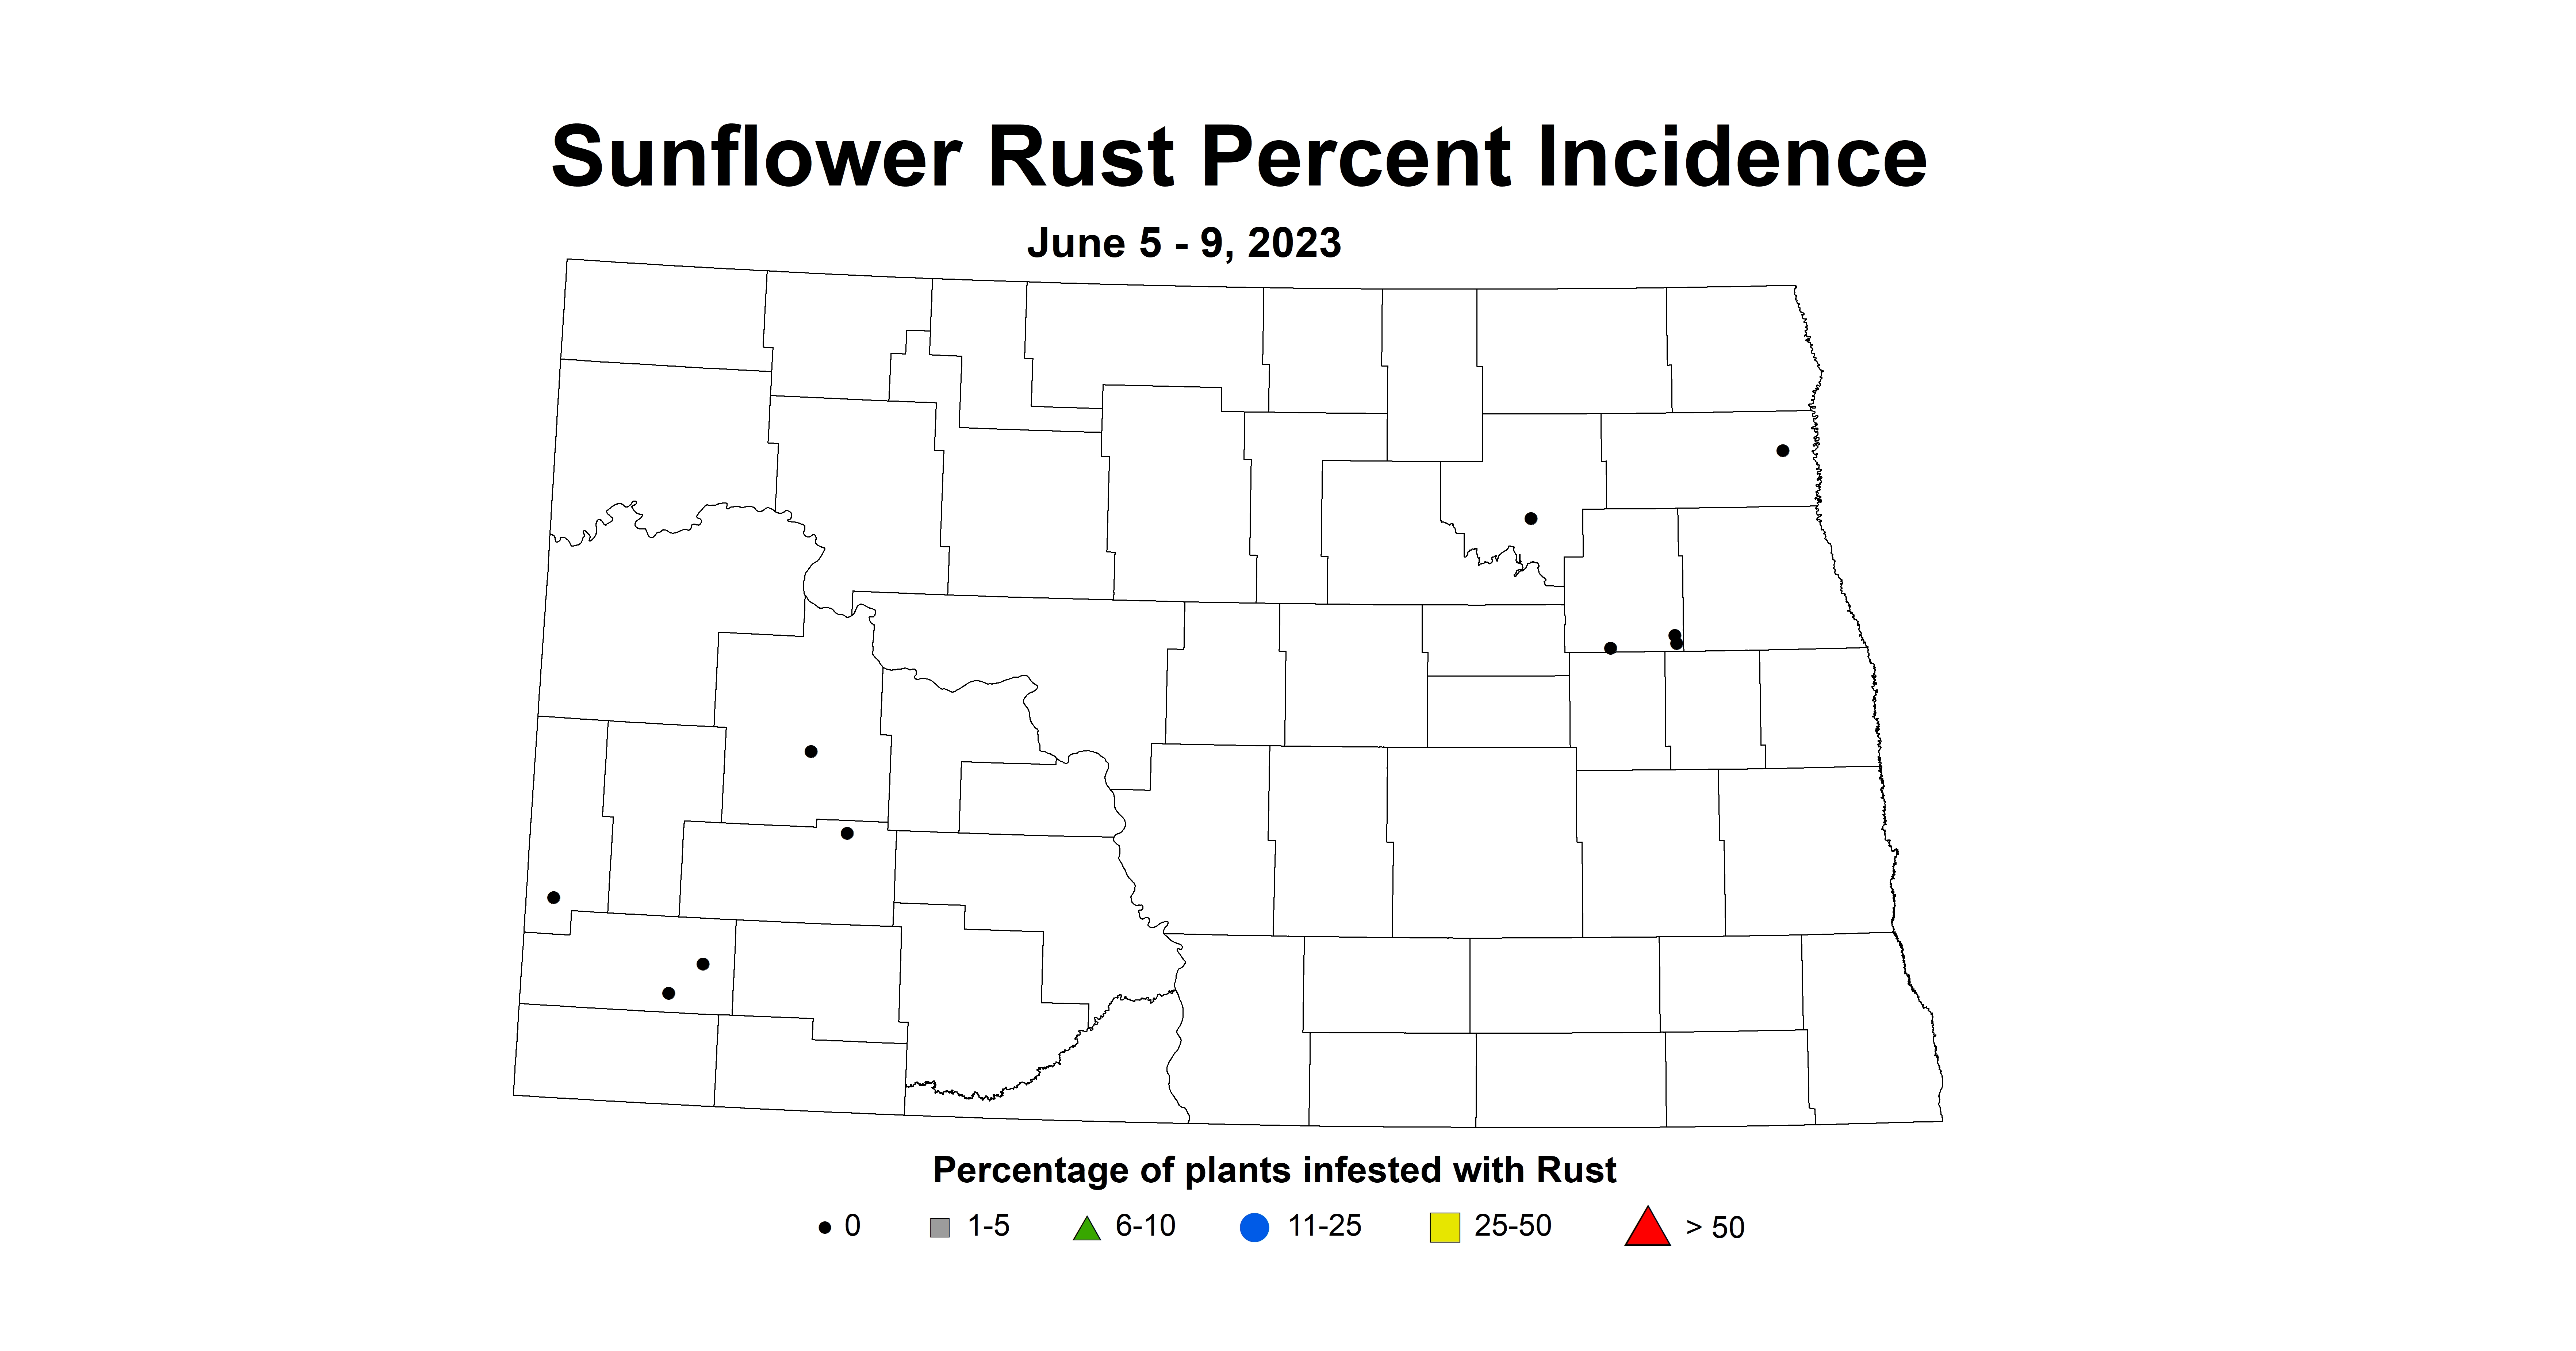 sunflower rust percent incidence June 5-9 2023